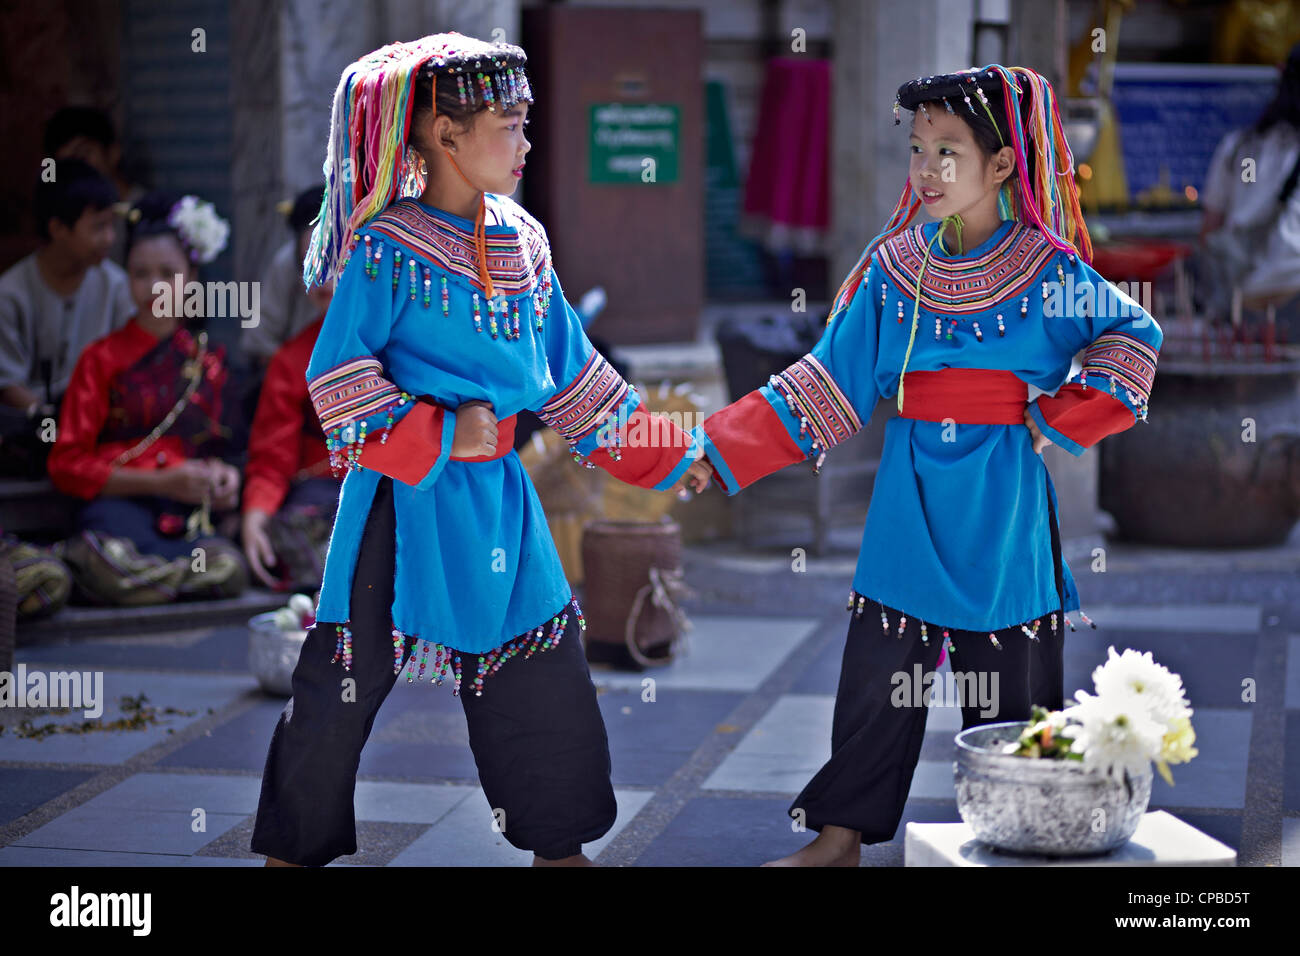 Thailand children, Lisu Northern hill tribe, Thai dancing girls in traditional costume Stock Photo